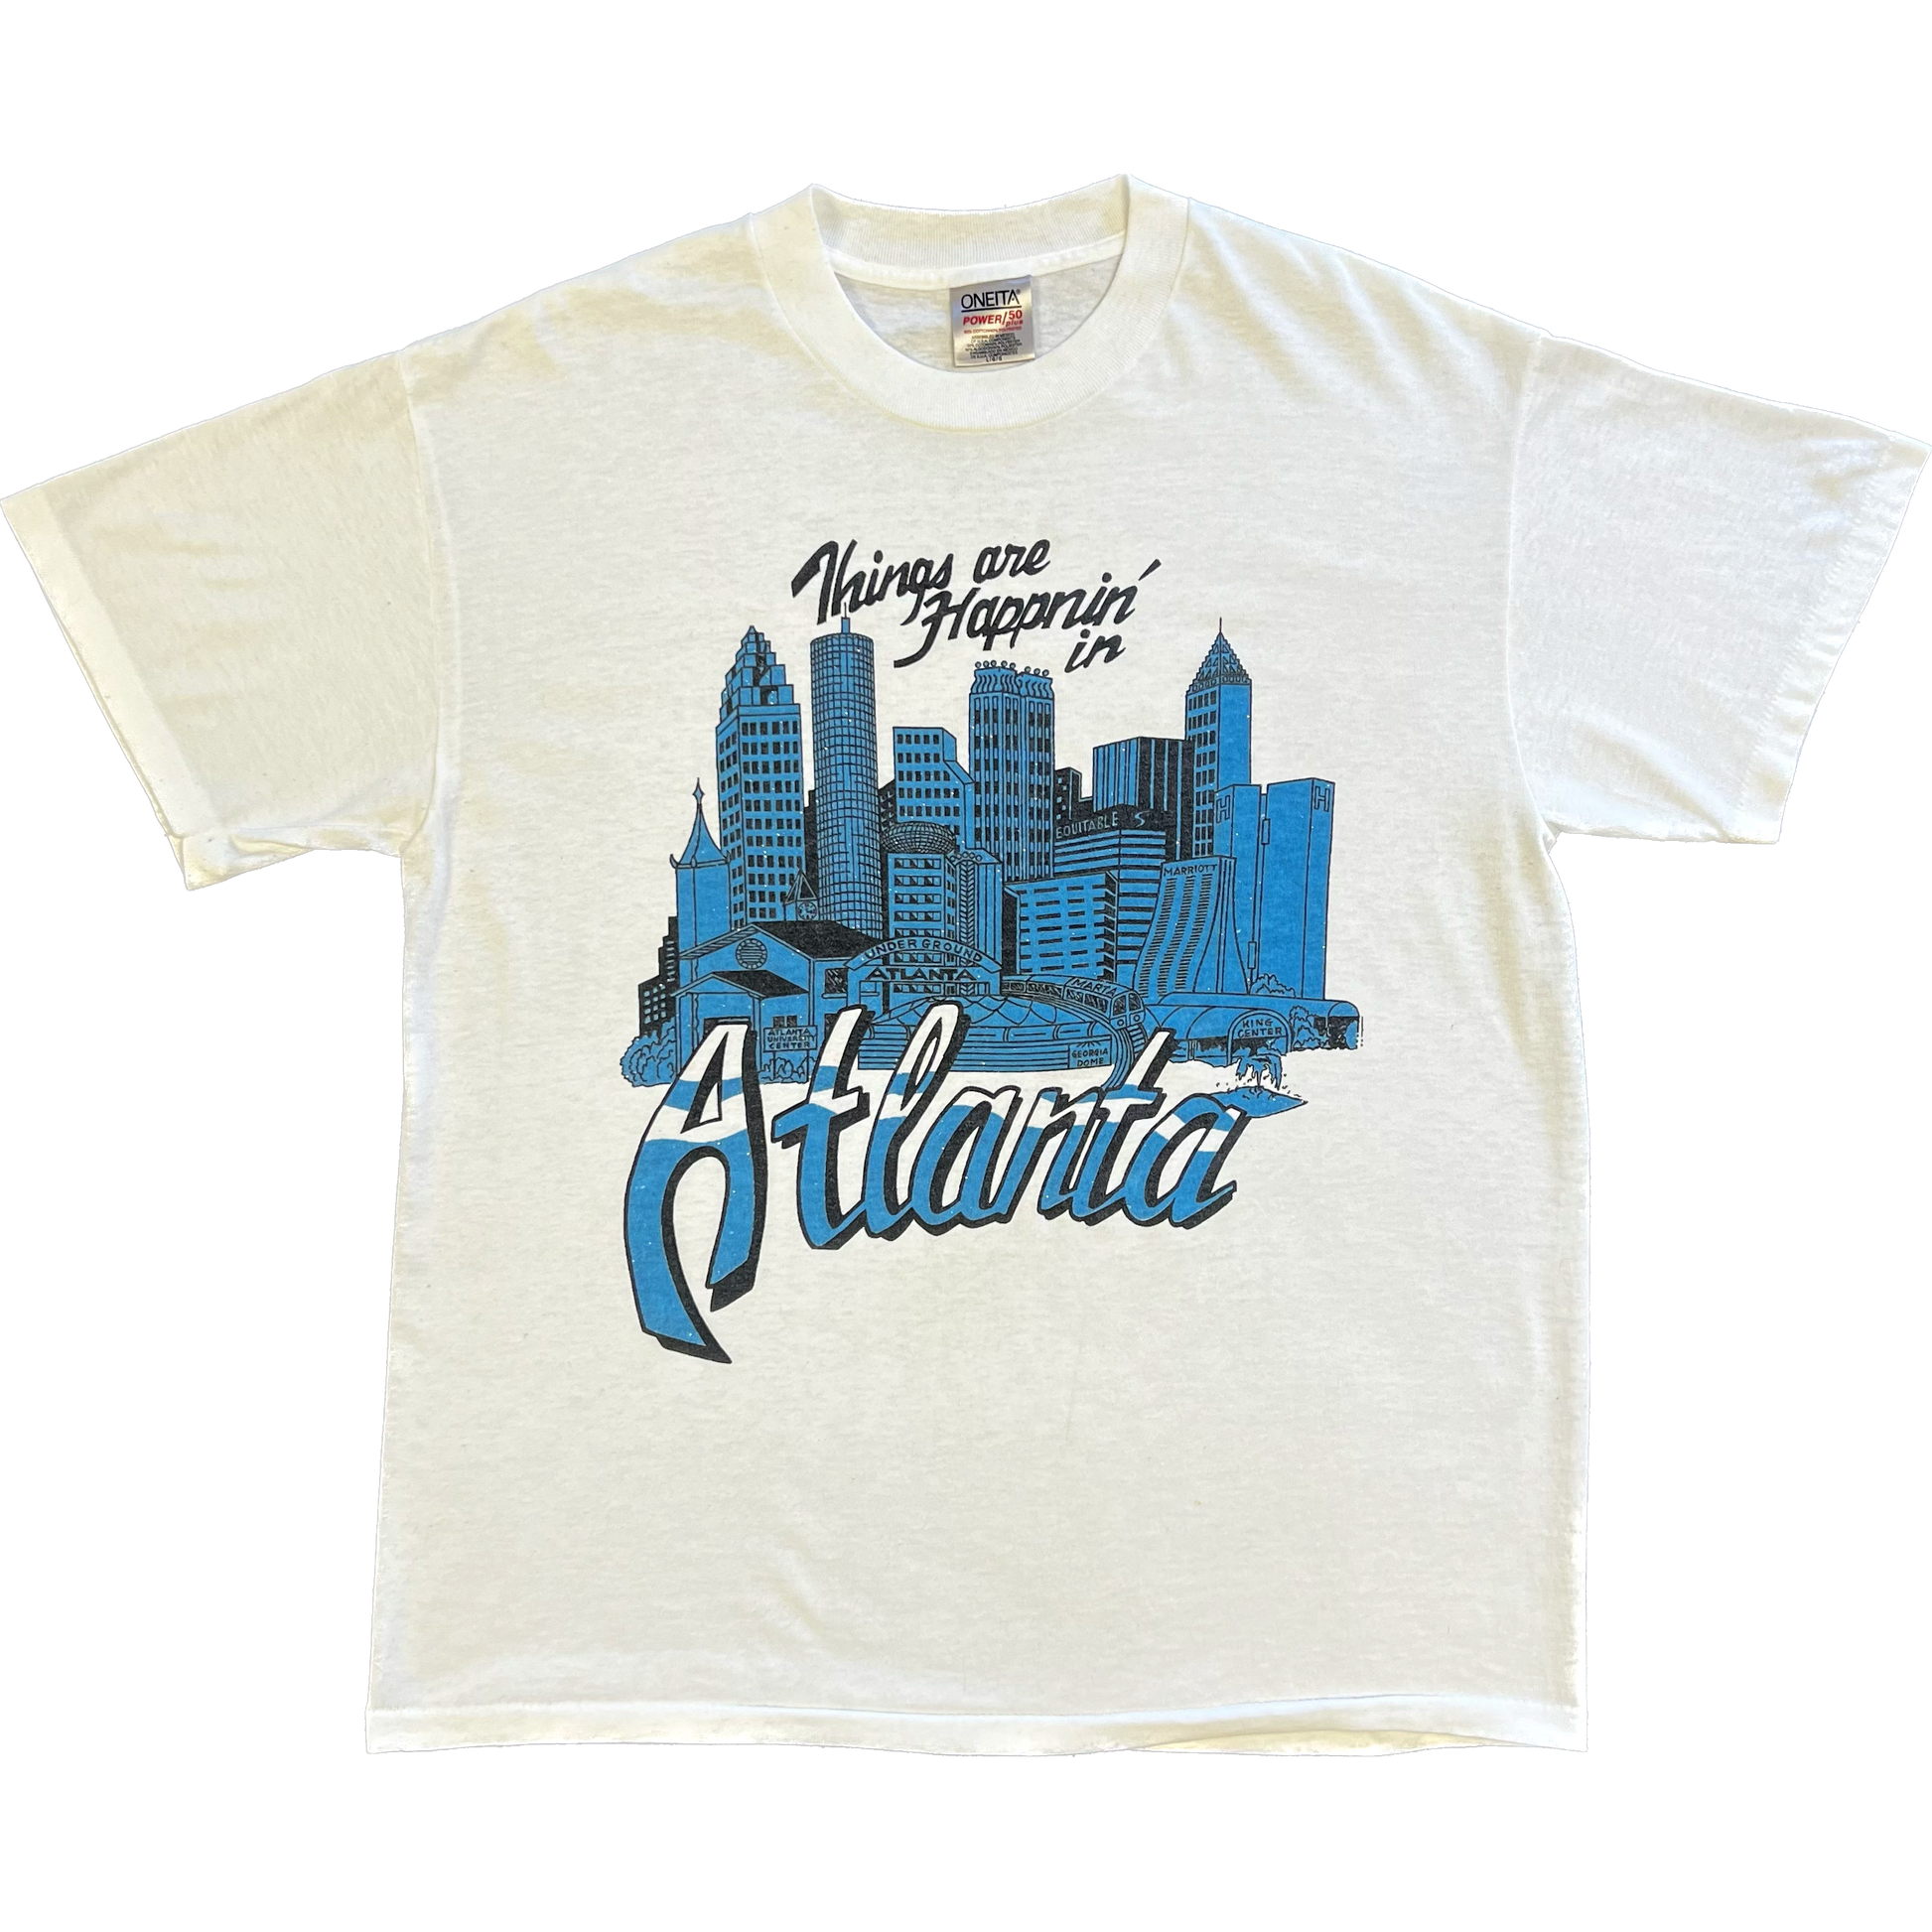 Vintage 1990s Atlanta Tee - Medium - White